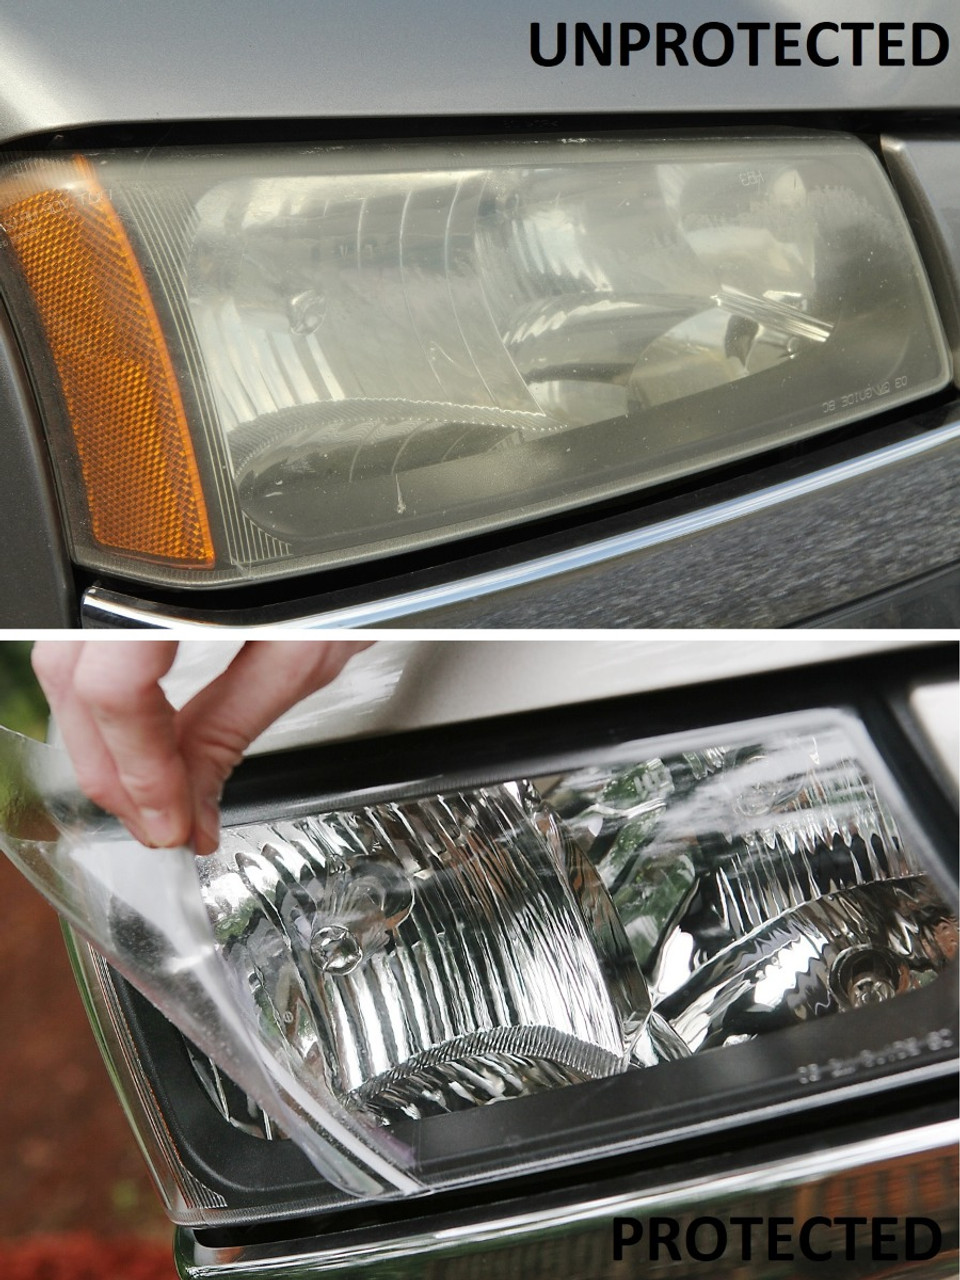 VW Golf R (10-14) Headlight Covers